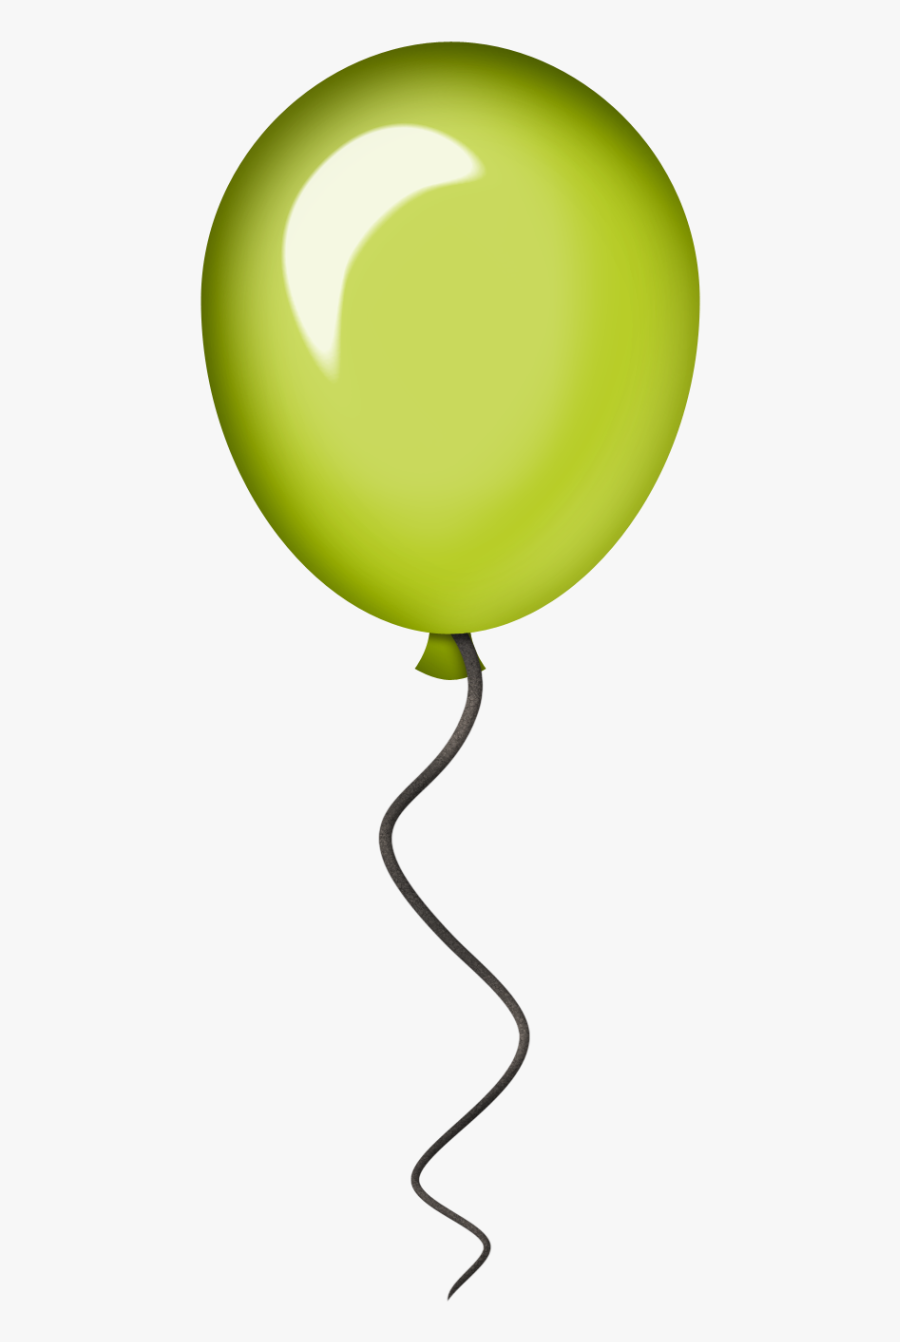 Single Birthday Balloons Clipart, Transparent Clipart